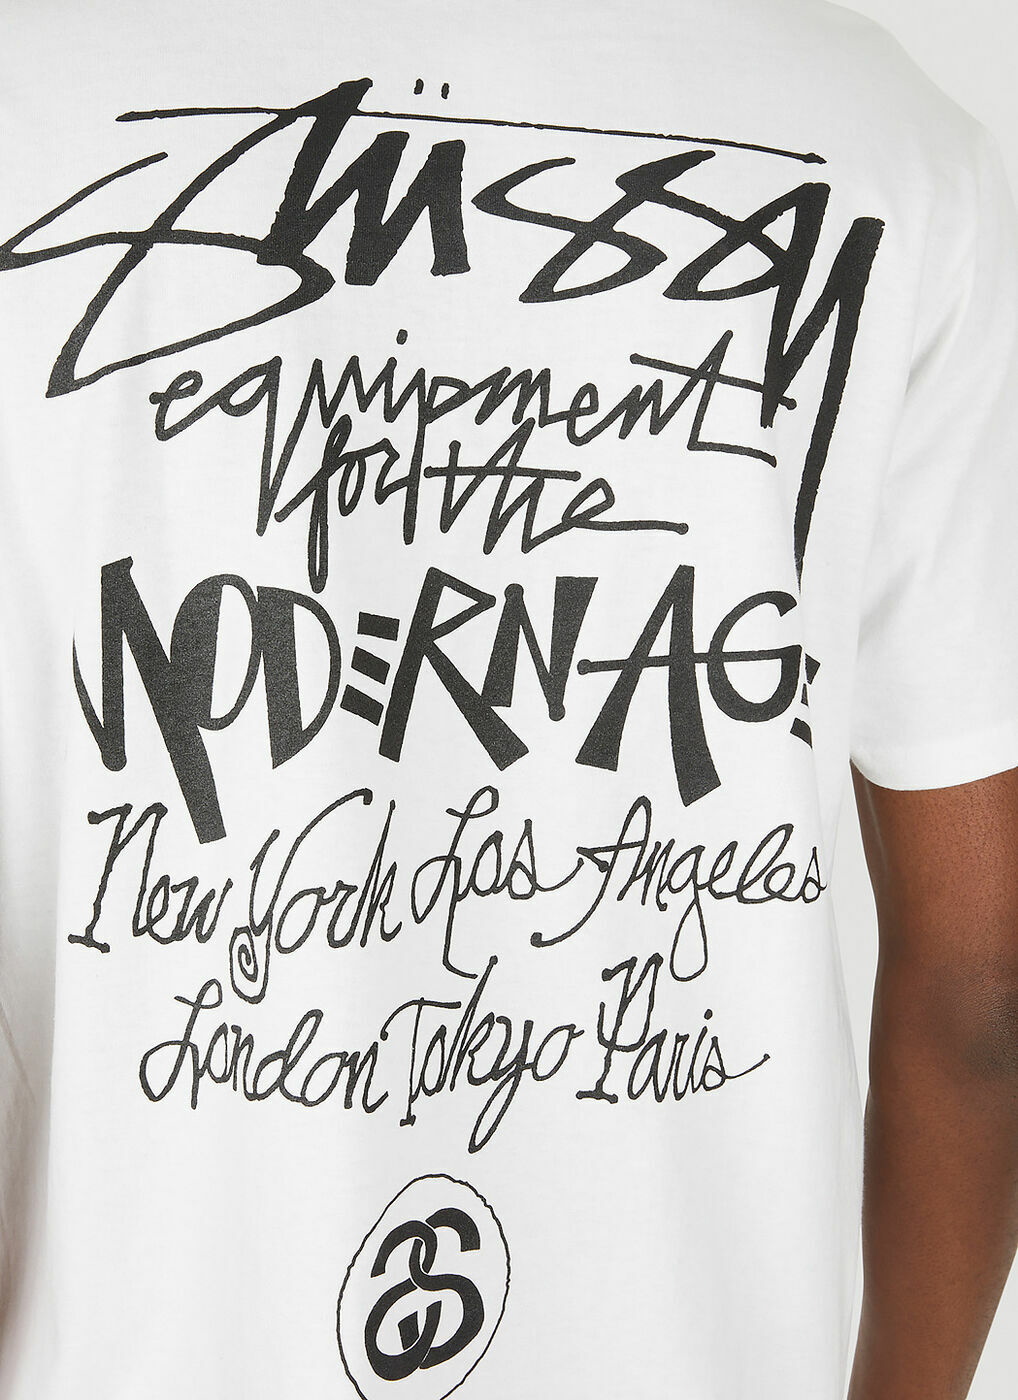 Stussy X Rick Owens NEW World Tour T-Shirt